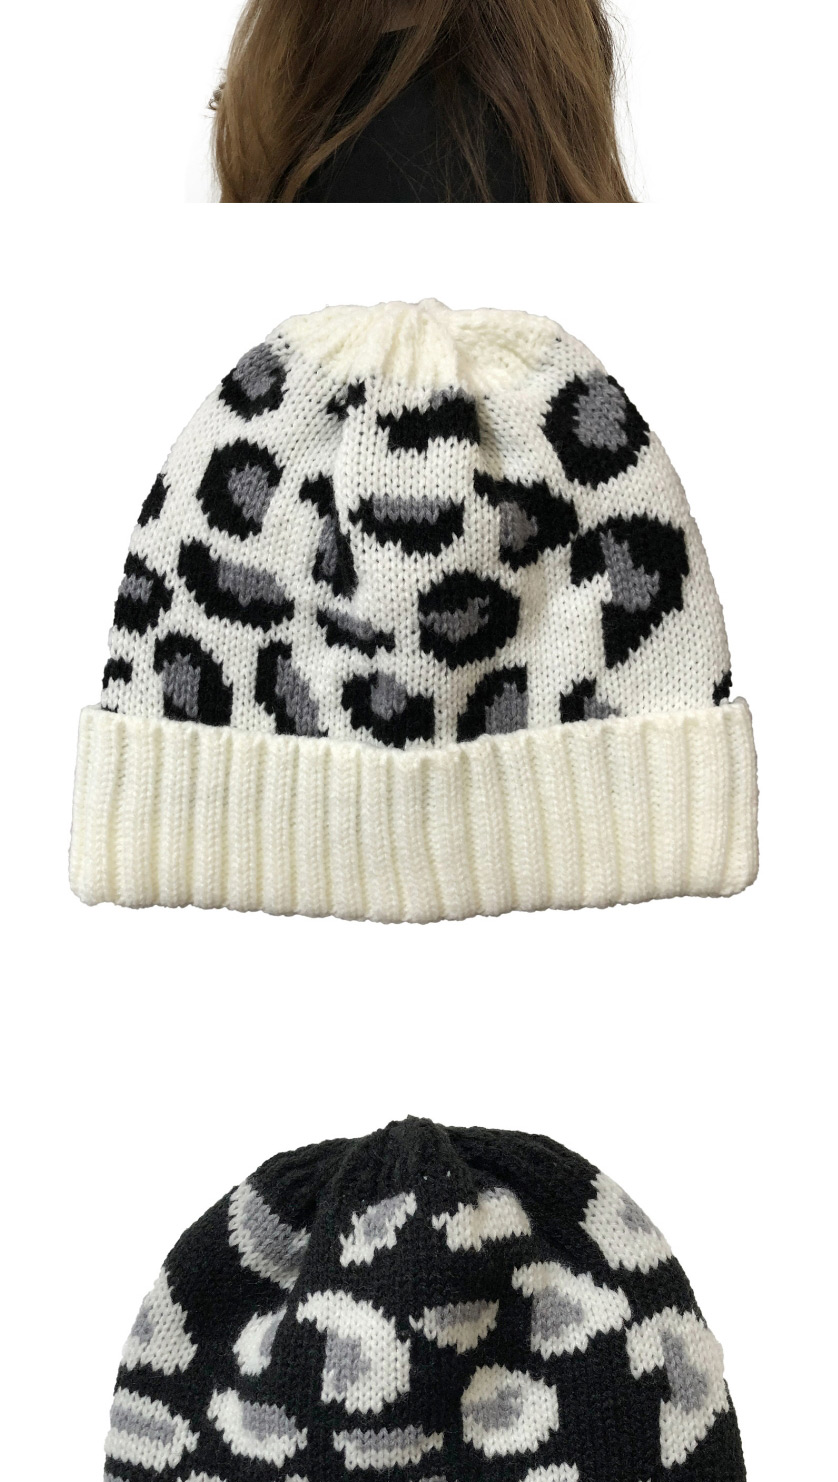 Fashion Claret Leopard Jacquard Knitted Beanie,Knitting Wool Hats